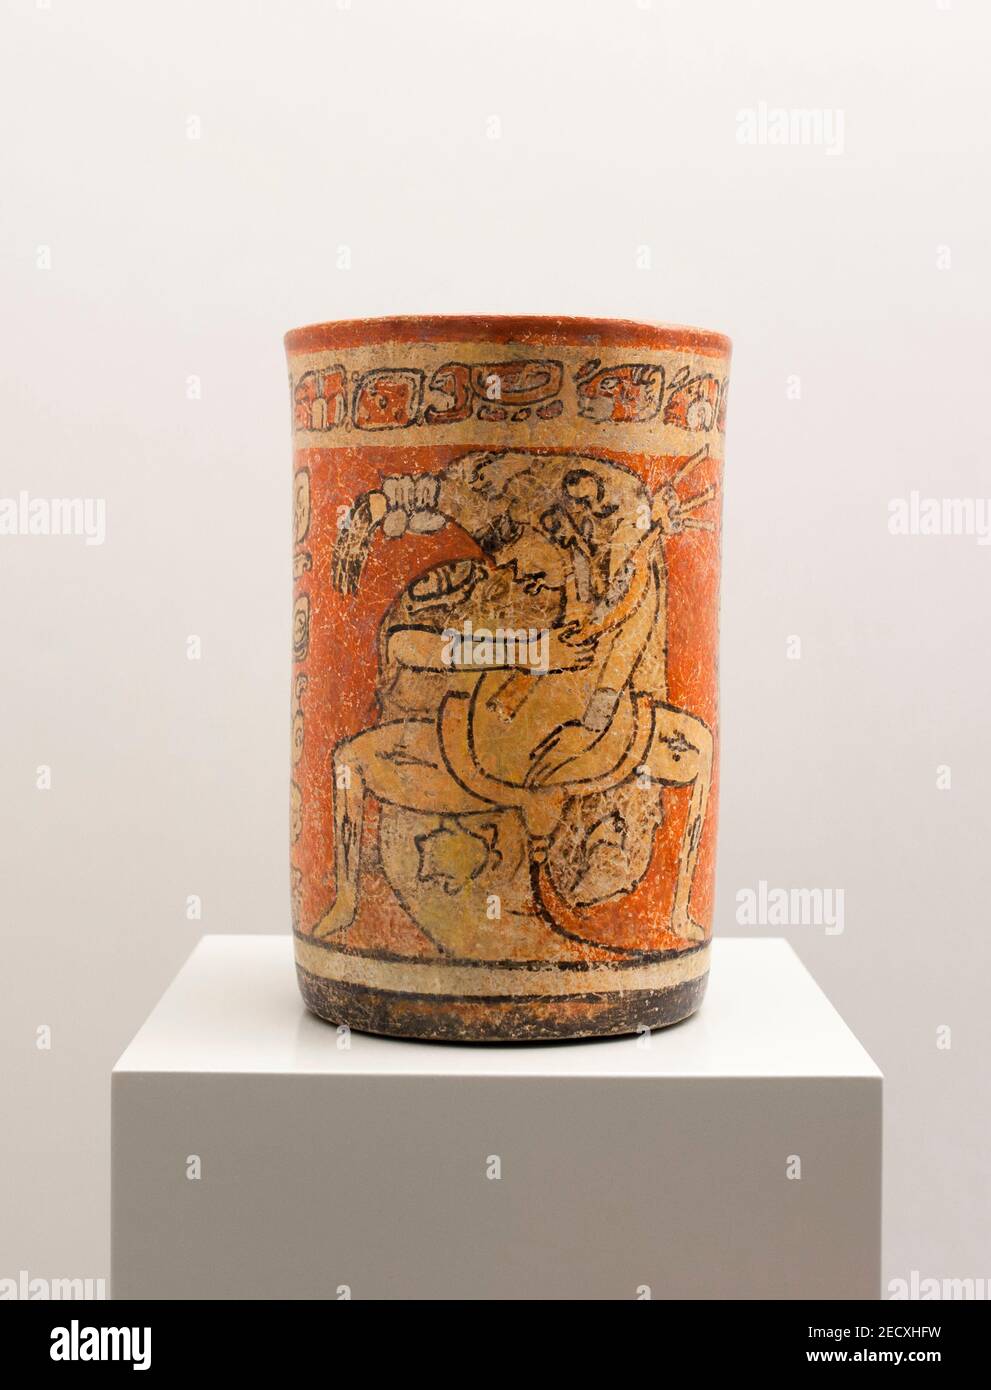 Madrid, Spanien - 11th. Jul 2020: Pokal mit mythologischer Szene. Maya-Kultur. 600 AC. Museum of the Americas, Madrid, Spanien Stockfoto